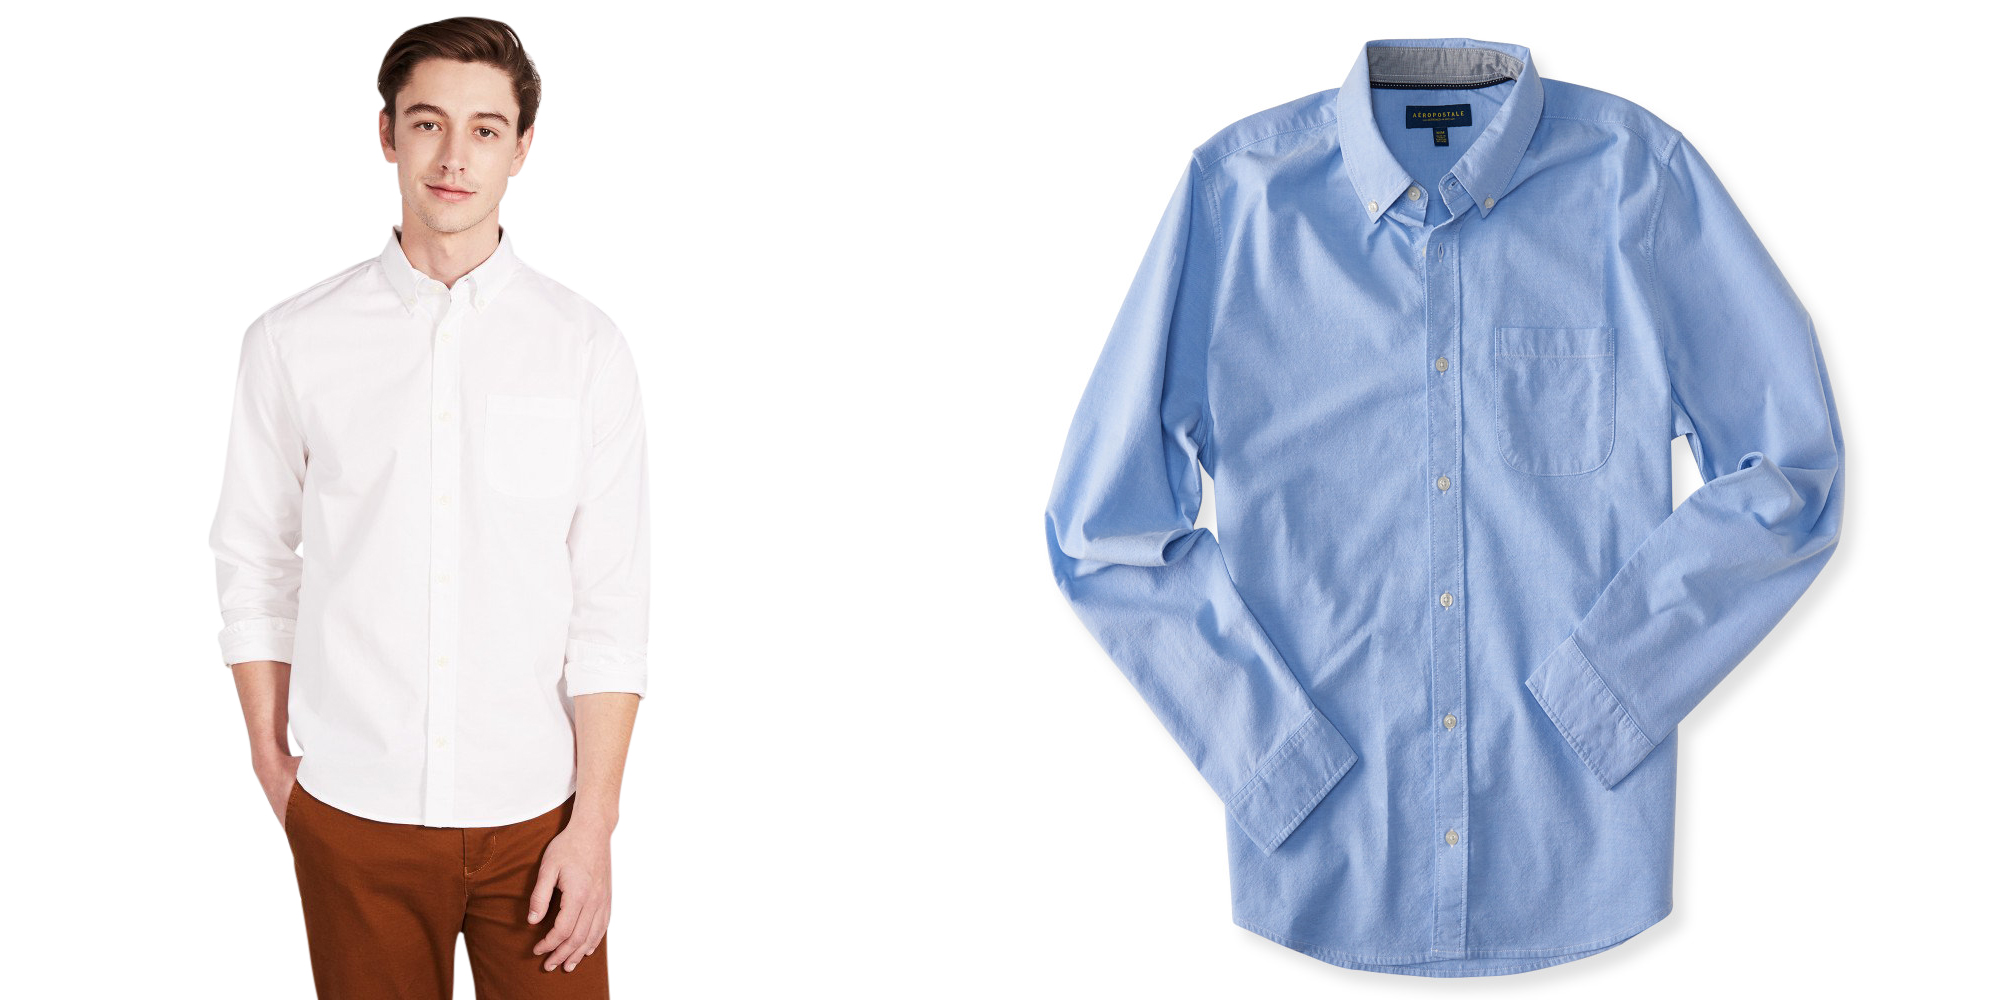 Aeropostle Men’s Long Sleeve Oxford Shirt Just $8.99 + FREE Shipping! (Reg $44.50)